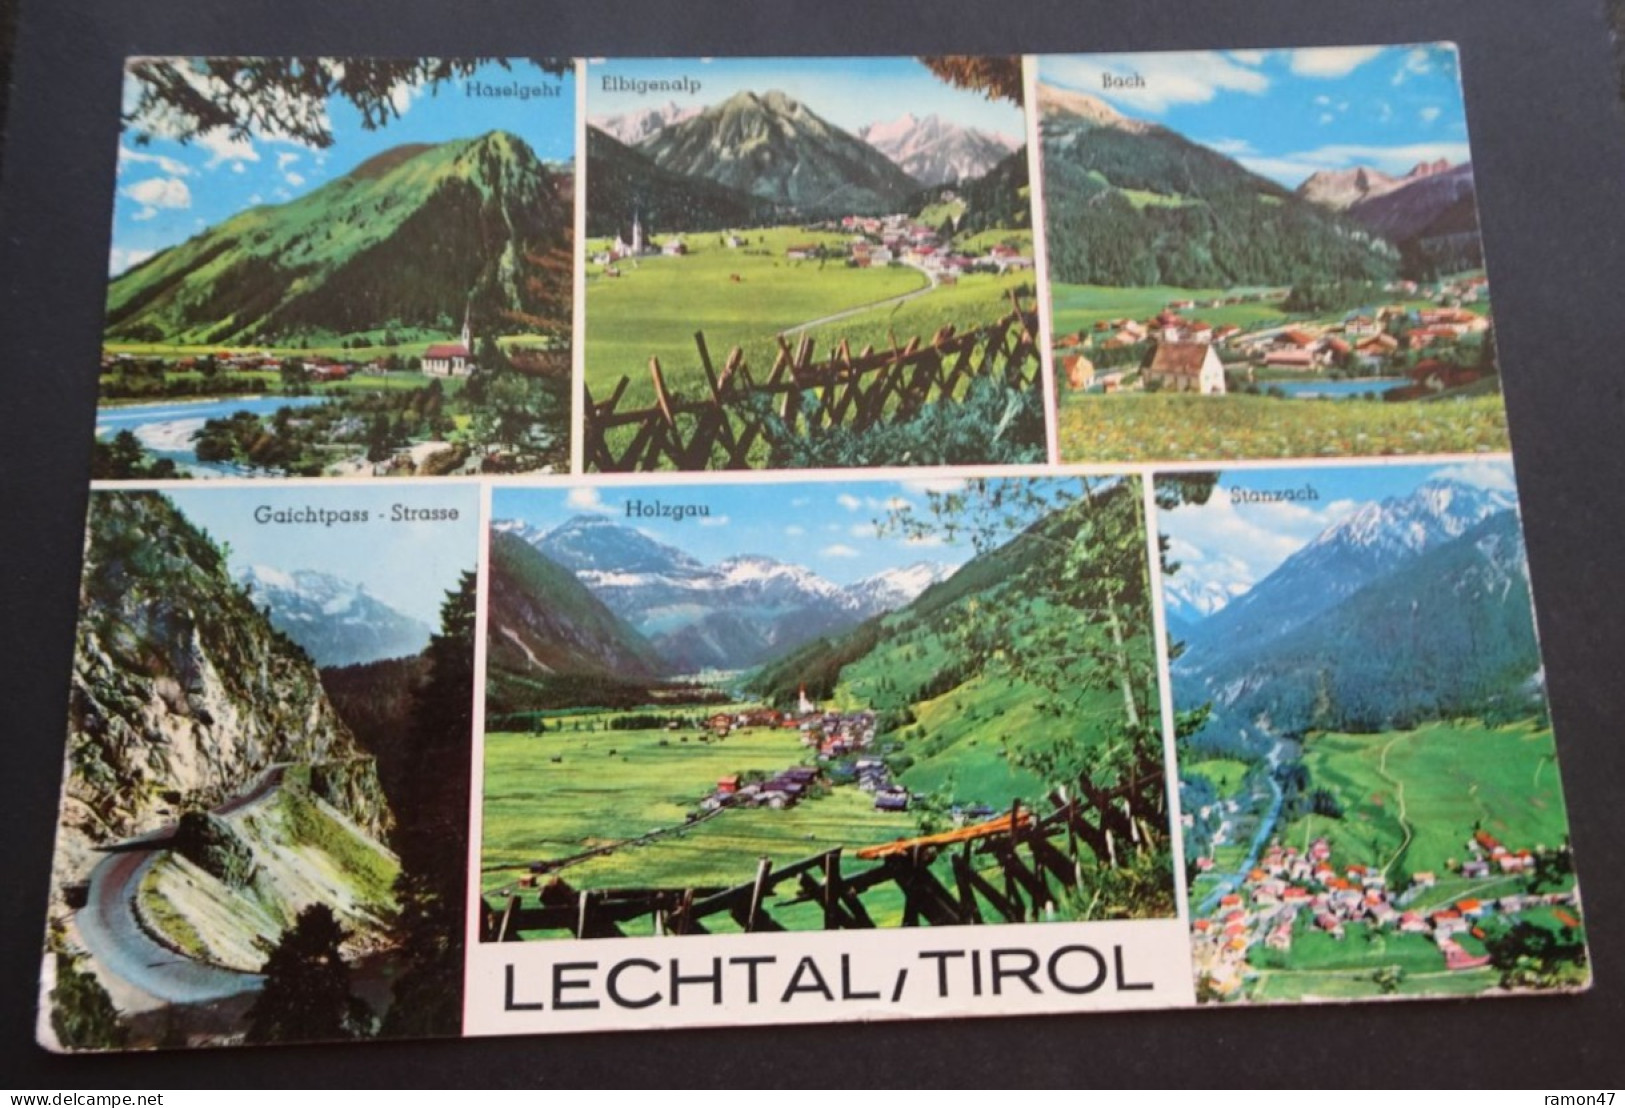 Lechtal - 80 Jahre Foto Risch-Lau, Bregenz - # F 6916 - Lechtal